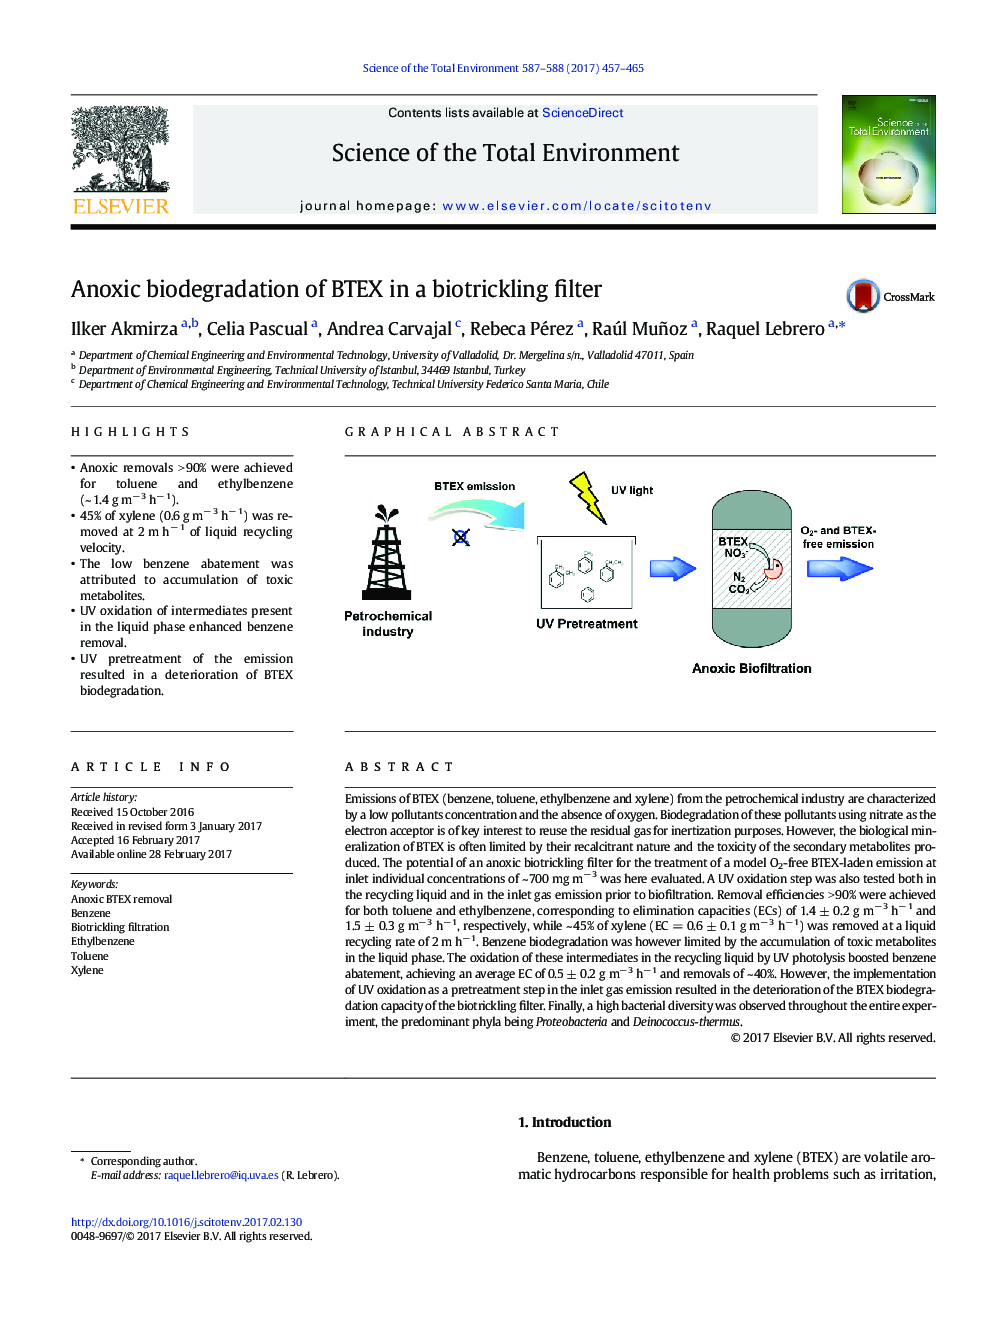 Anoxic biodegradation of BTEX in a biotrickling filter